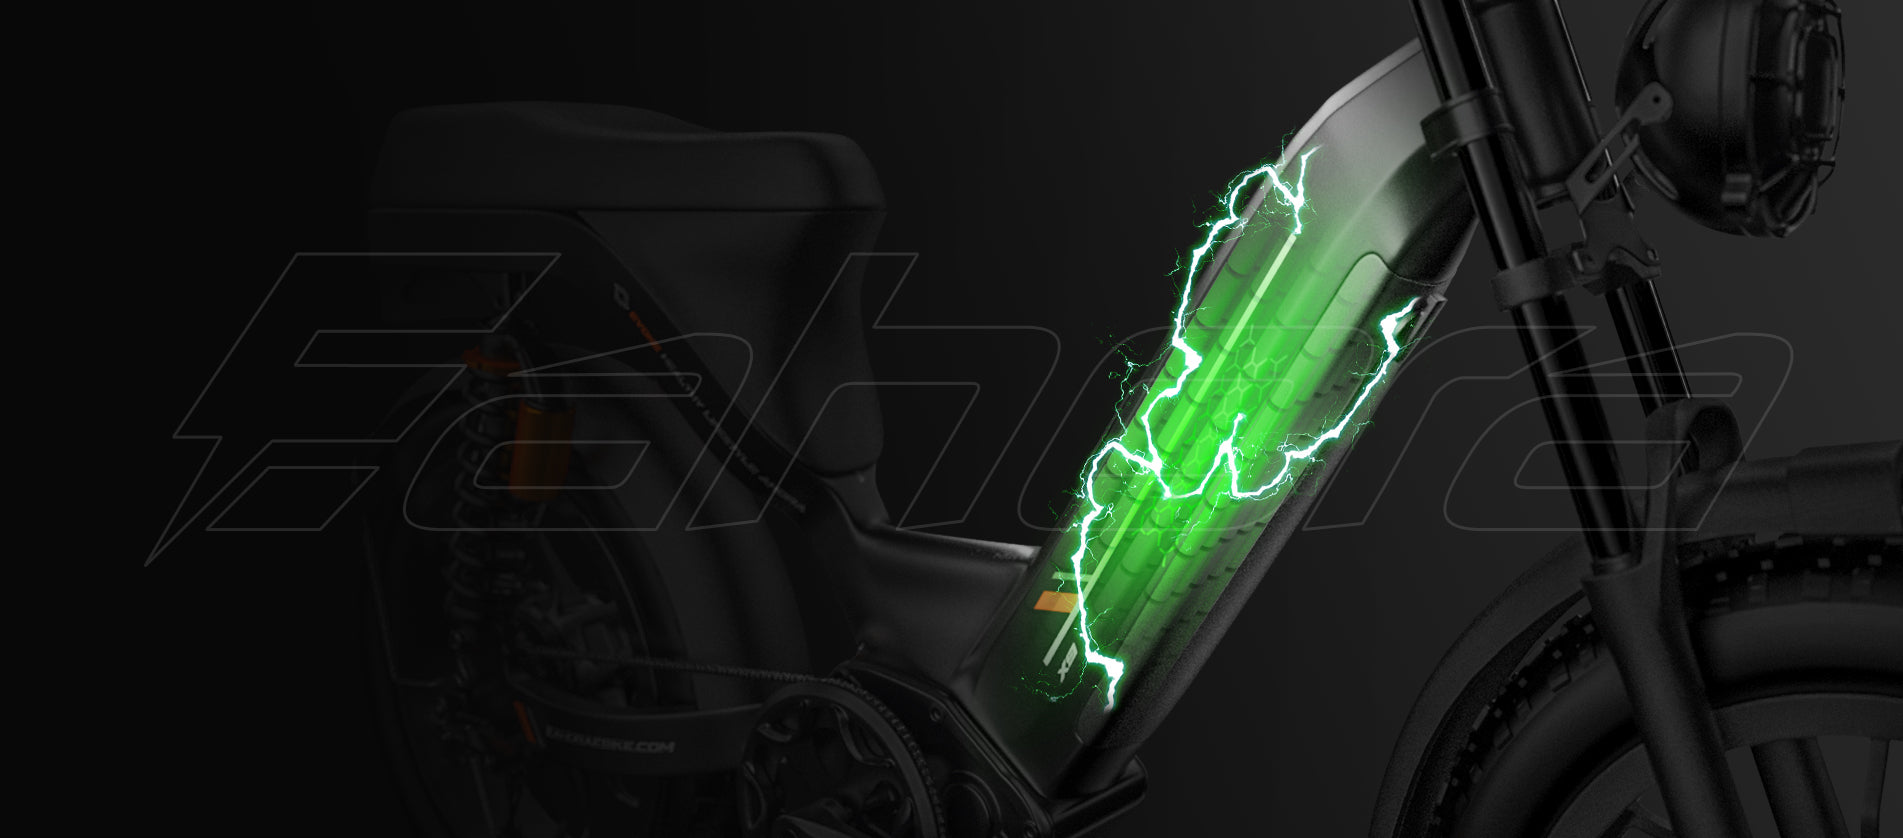 Electric Bike Battery 48v | Moped Style Electric Bike | Eahora X9